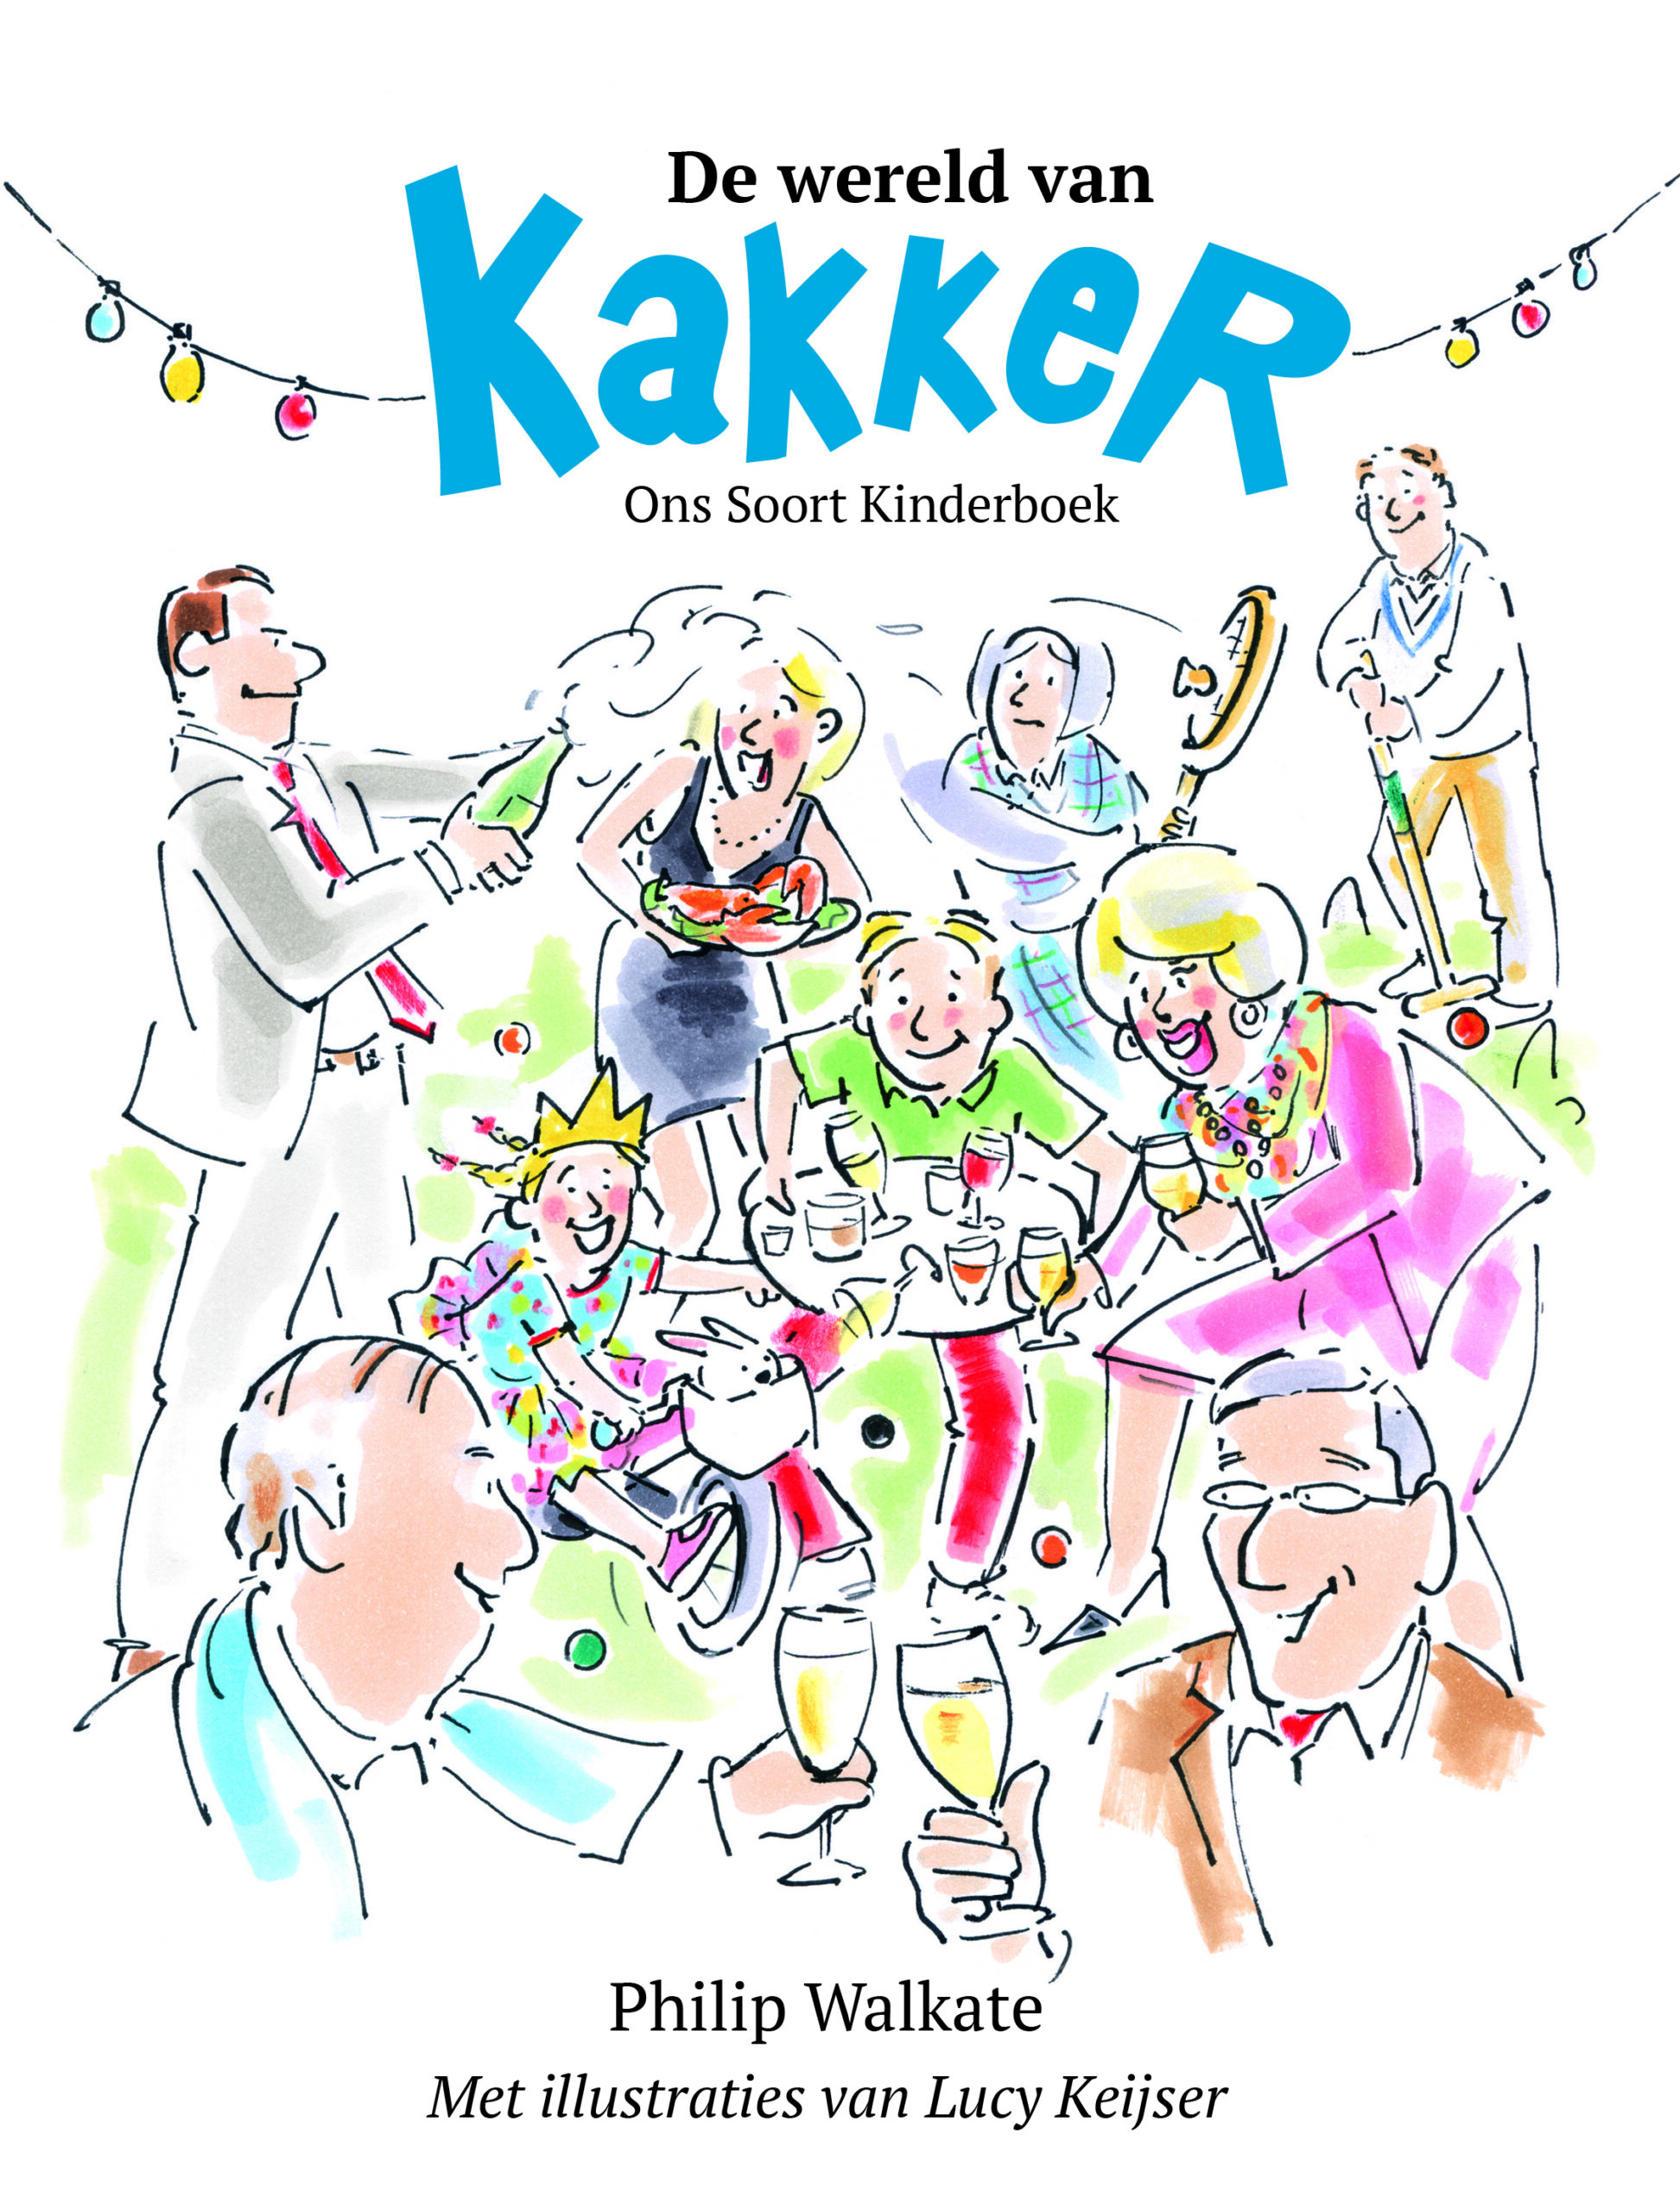 De wereld van Kakker – Ons Soort Kinderboek